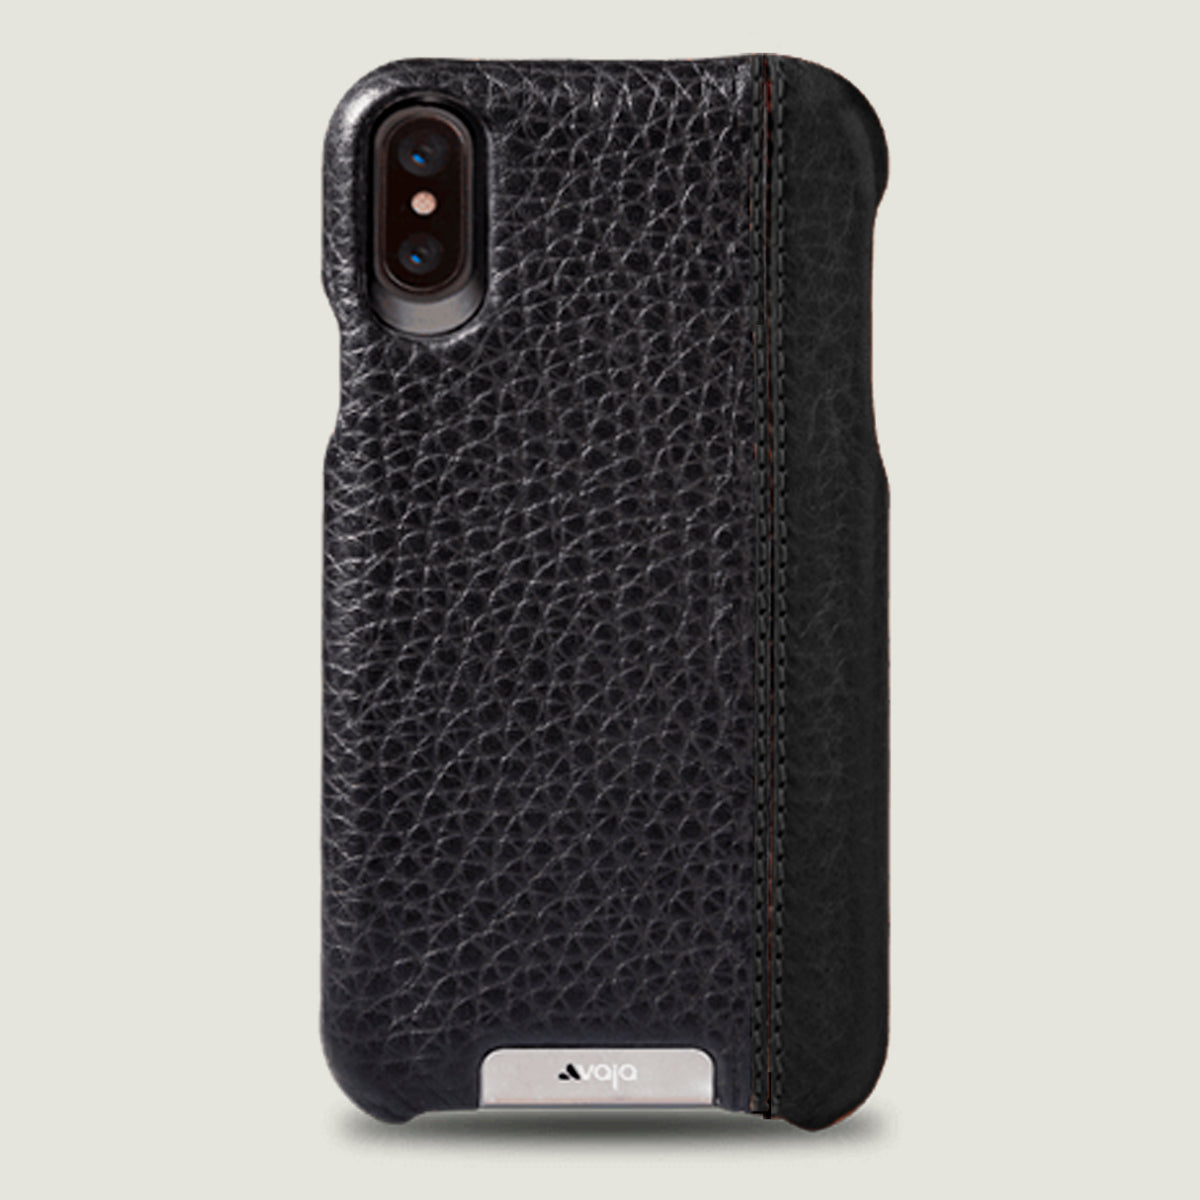 Grip LP iPhone X / iPhone Xs leather case - Vaja